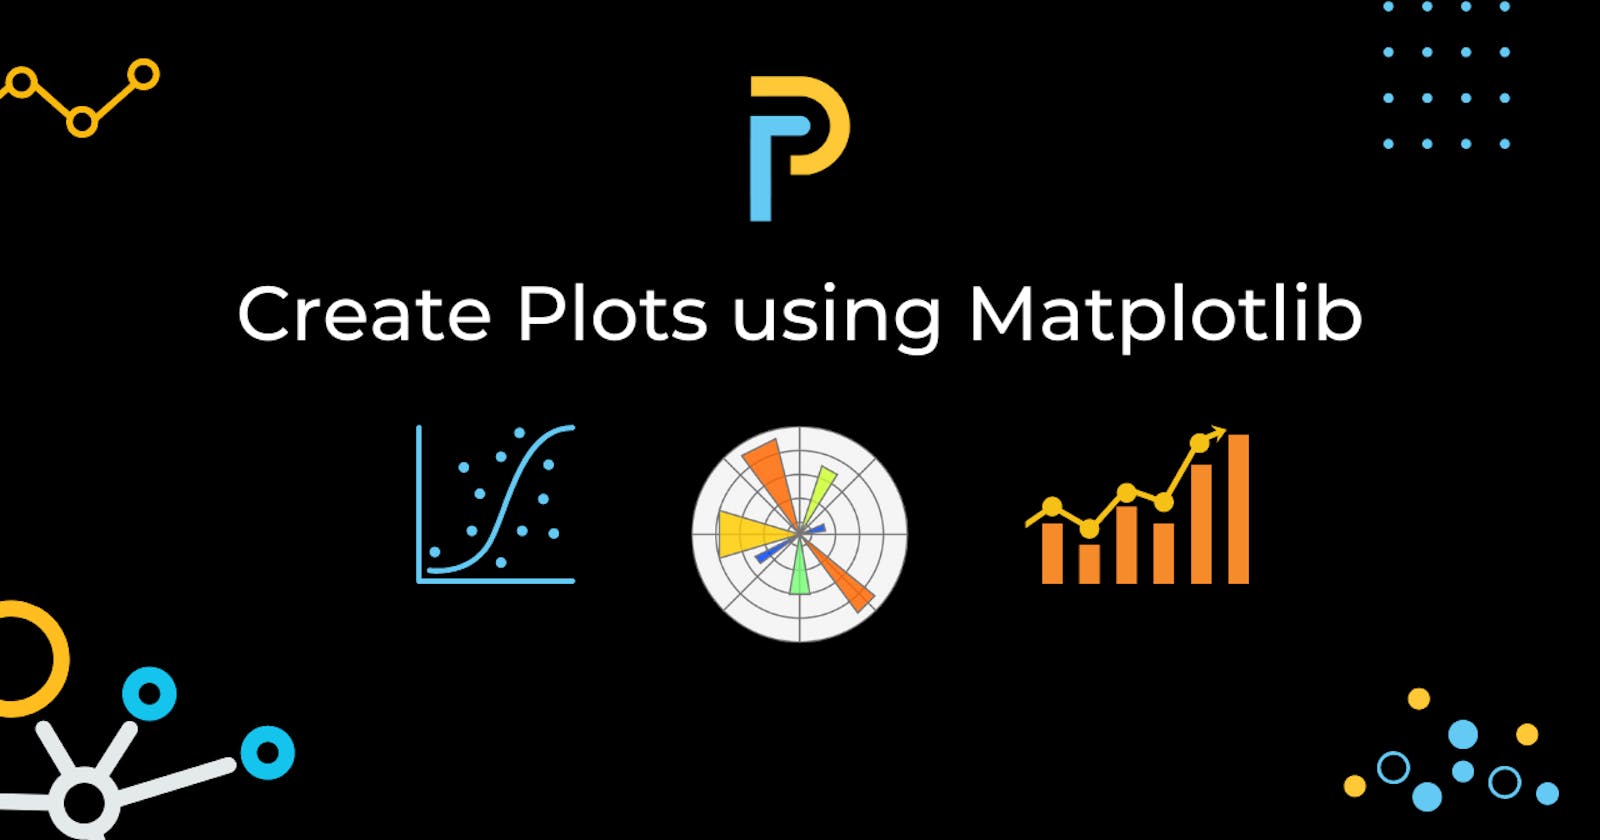 Create Plots using Matplotlib